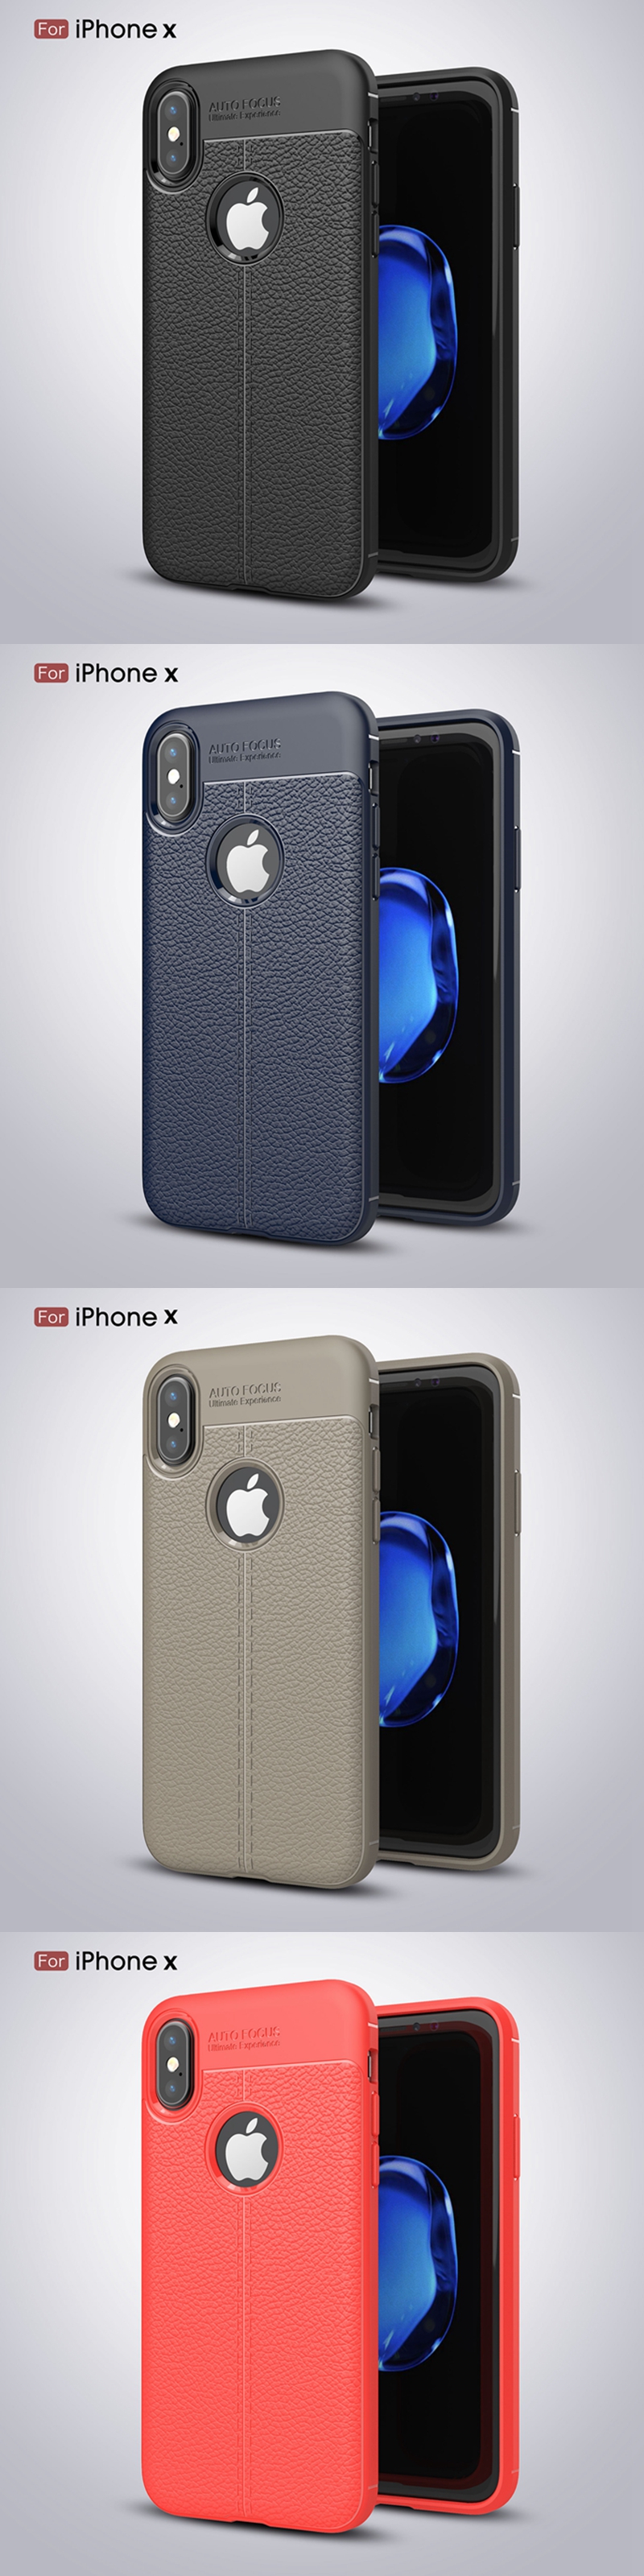 Bakeeytrade-Anti-Fingerprint-Soft-TPU-Litchi-Leather-Case-Cover-for-iPhone-X787Plus8Plus6Plus6sPlus-1203025-7